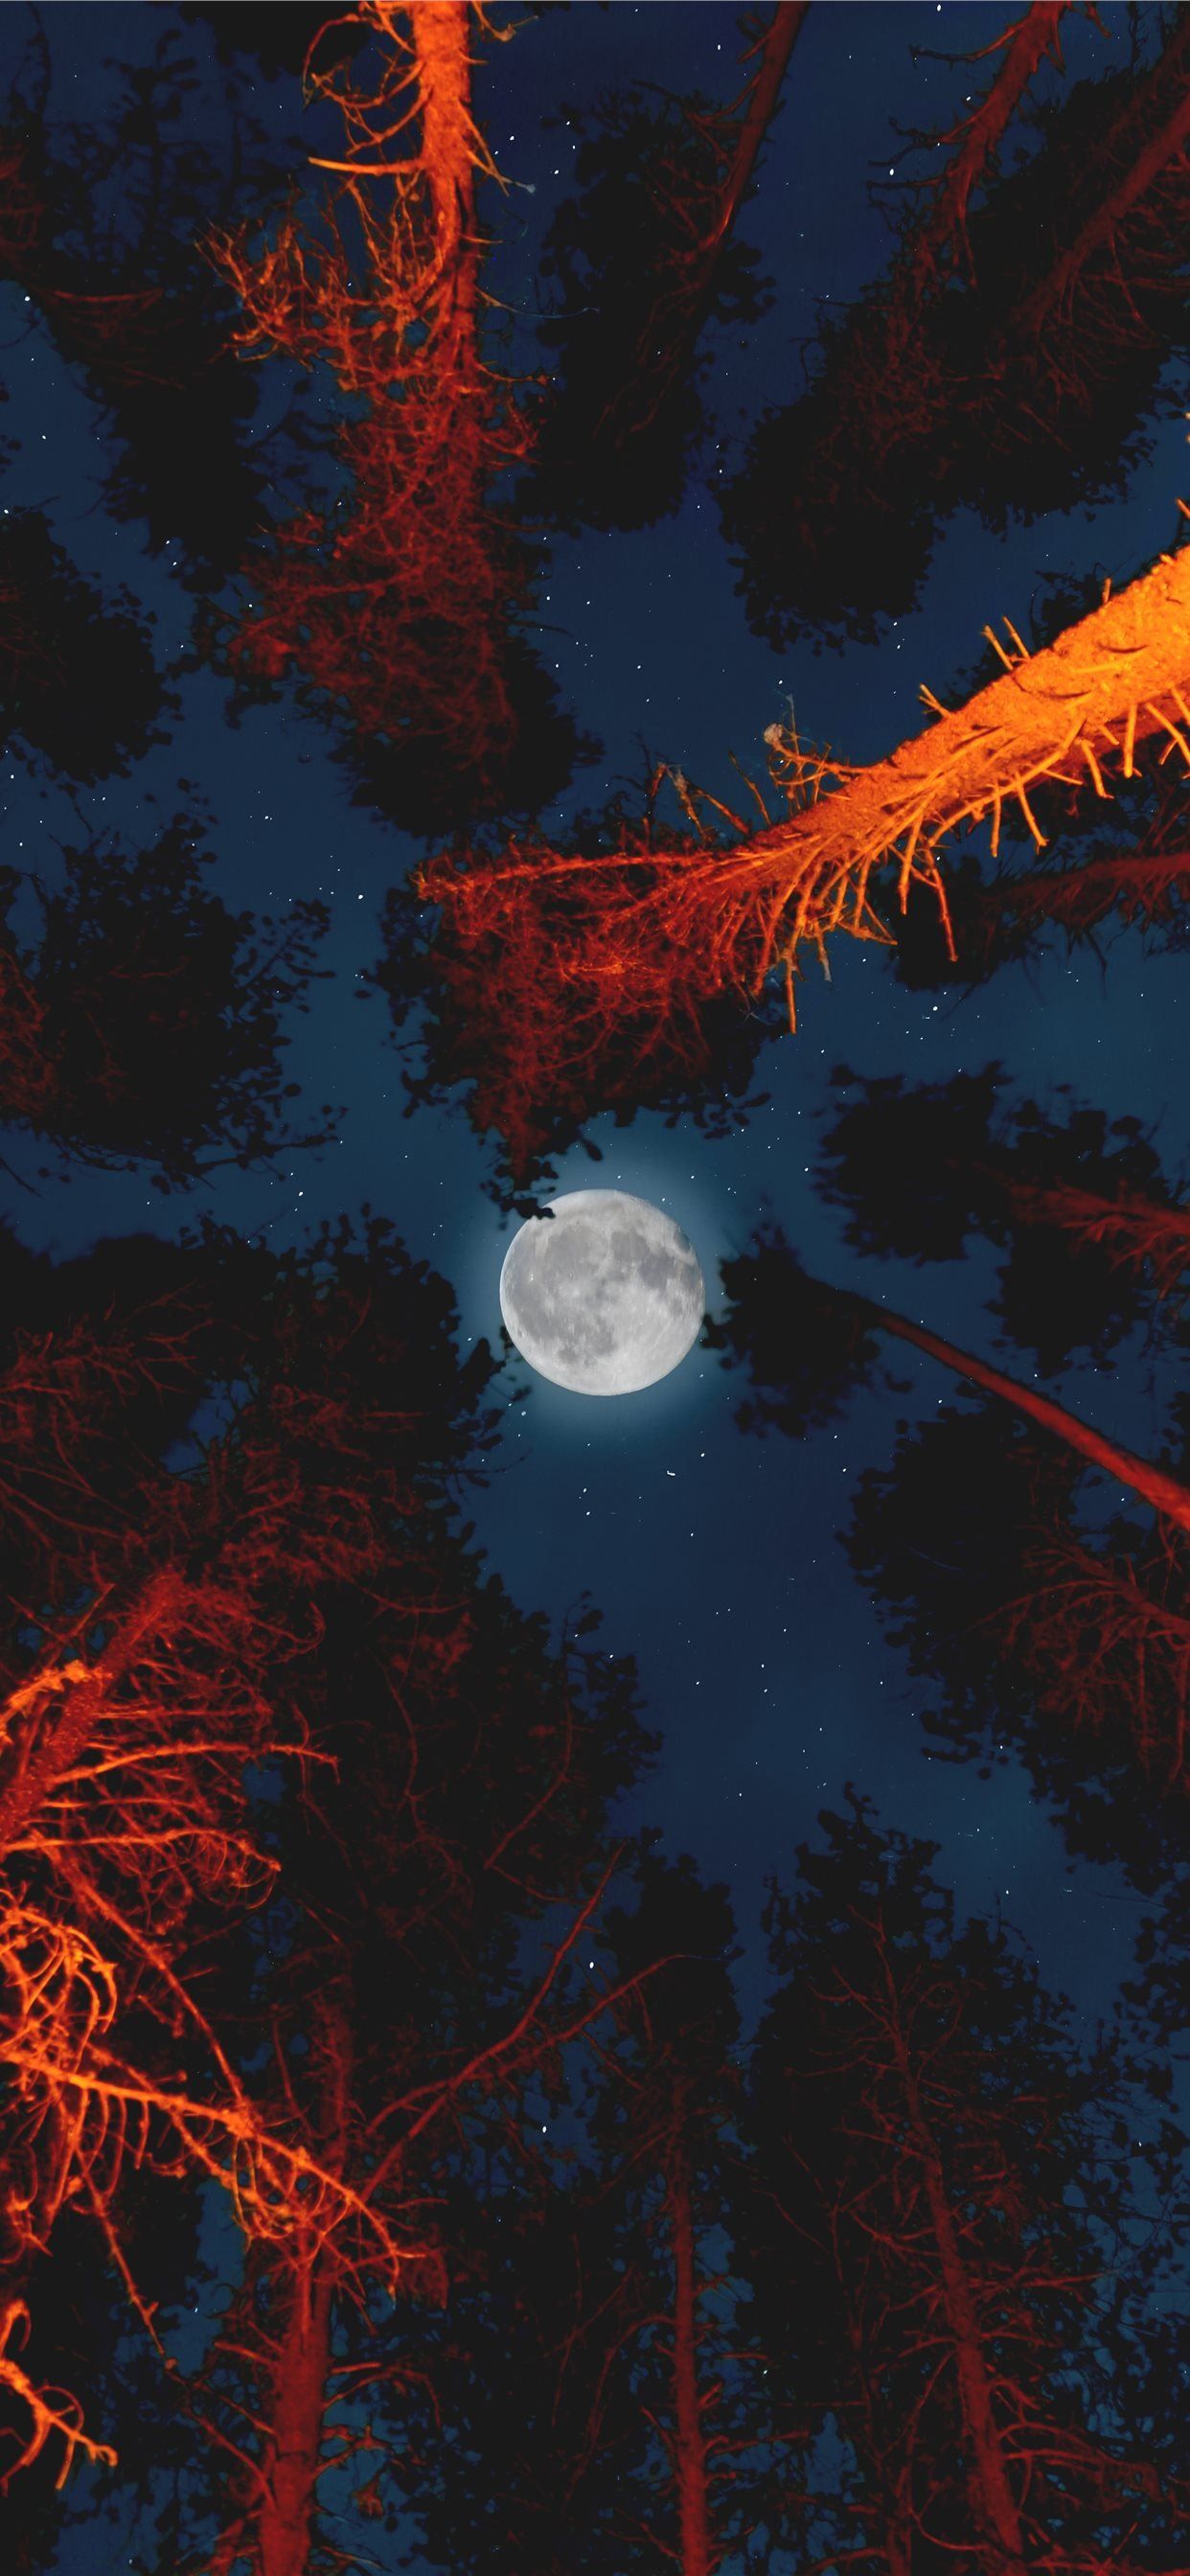 A full moon shining through the trees - Moon